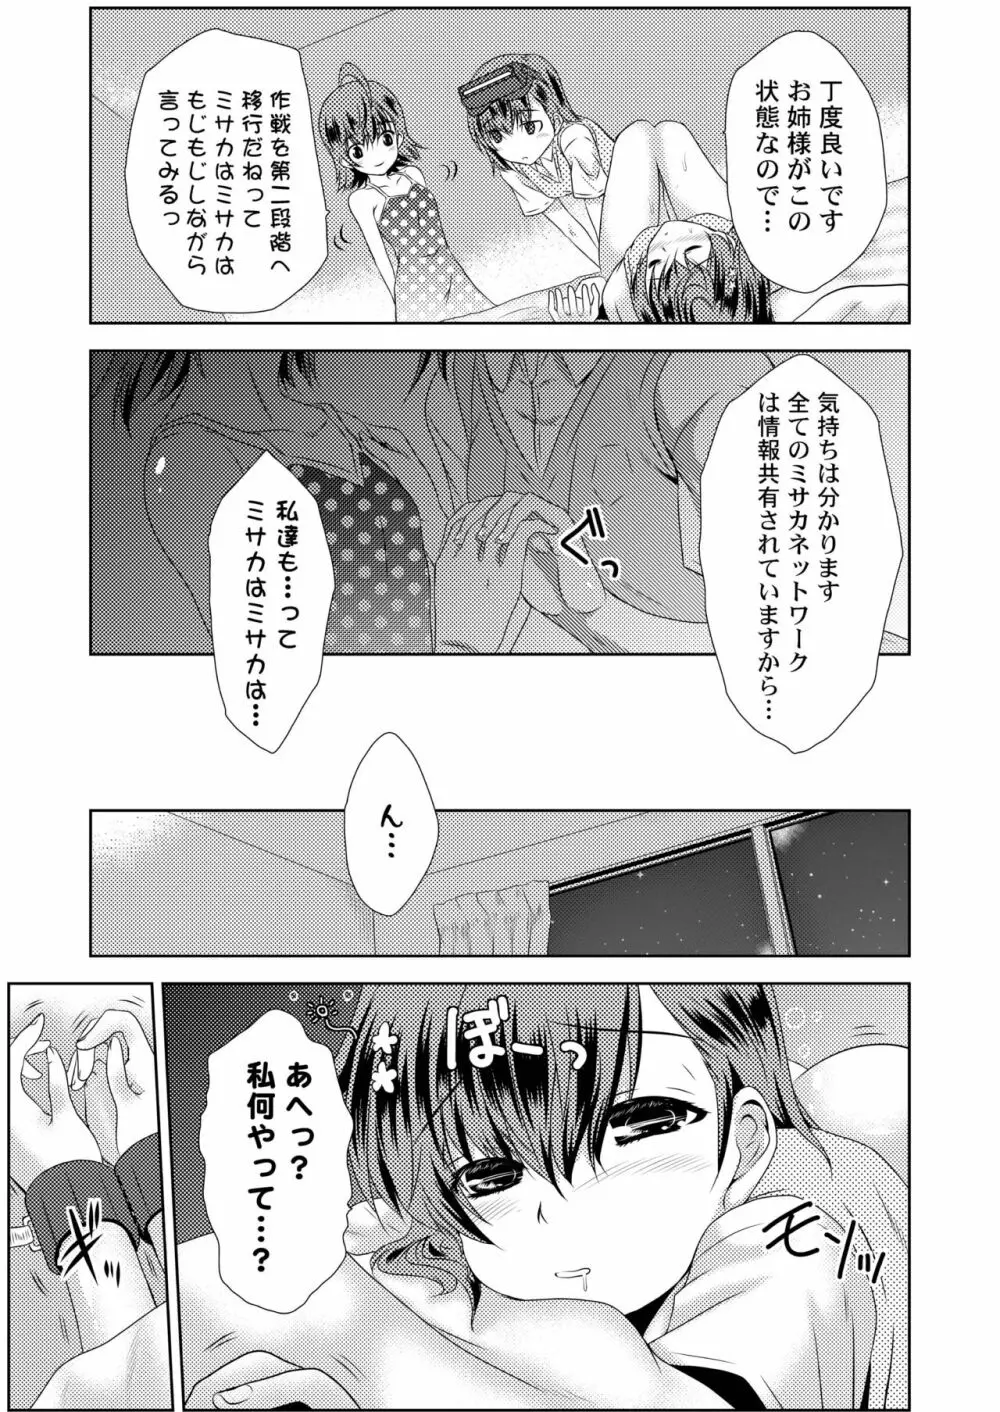 MISAKA×3 素直なキミ達へ。 16ページ